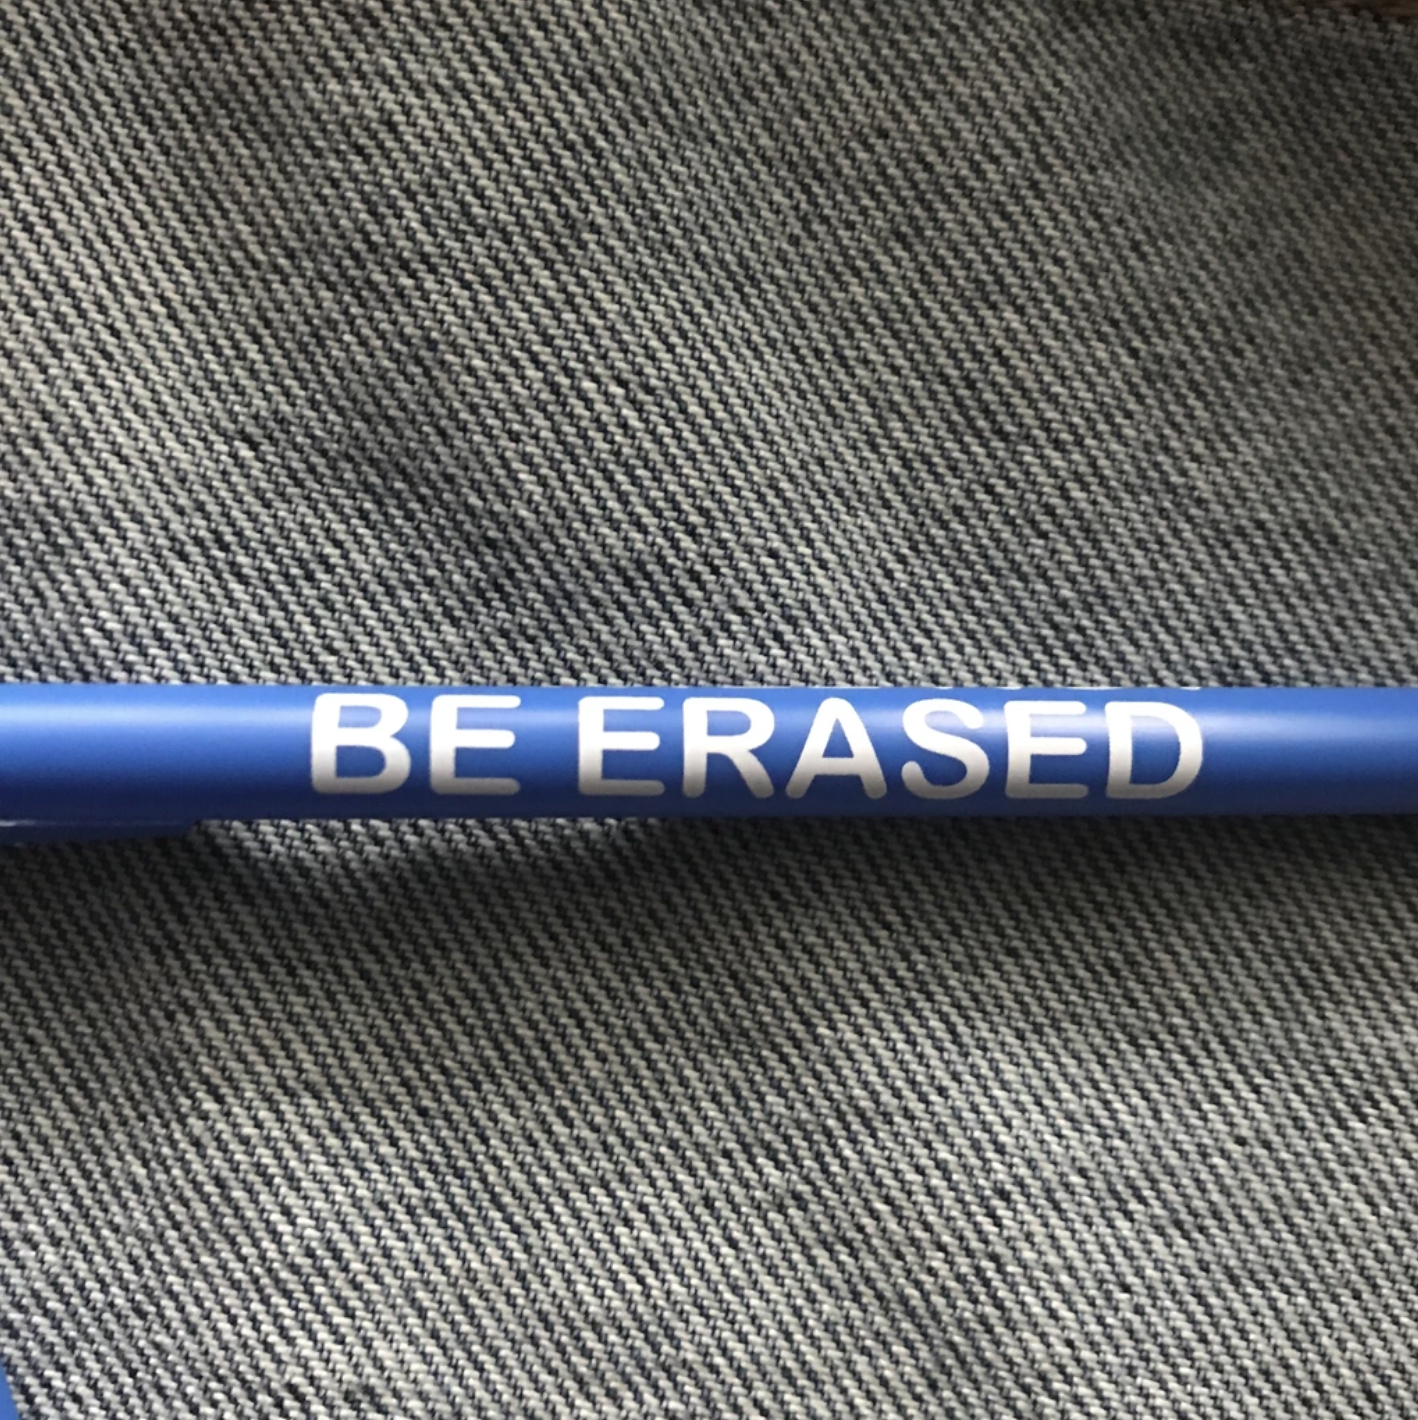 Double Denim Dude: We Will Not Be Erased Pens